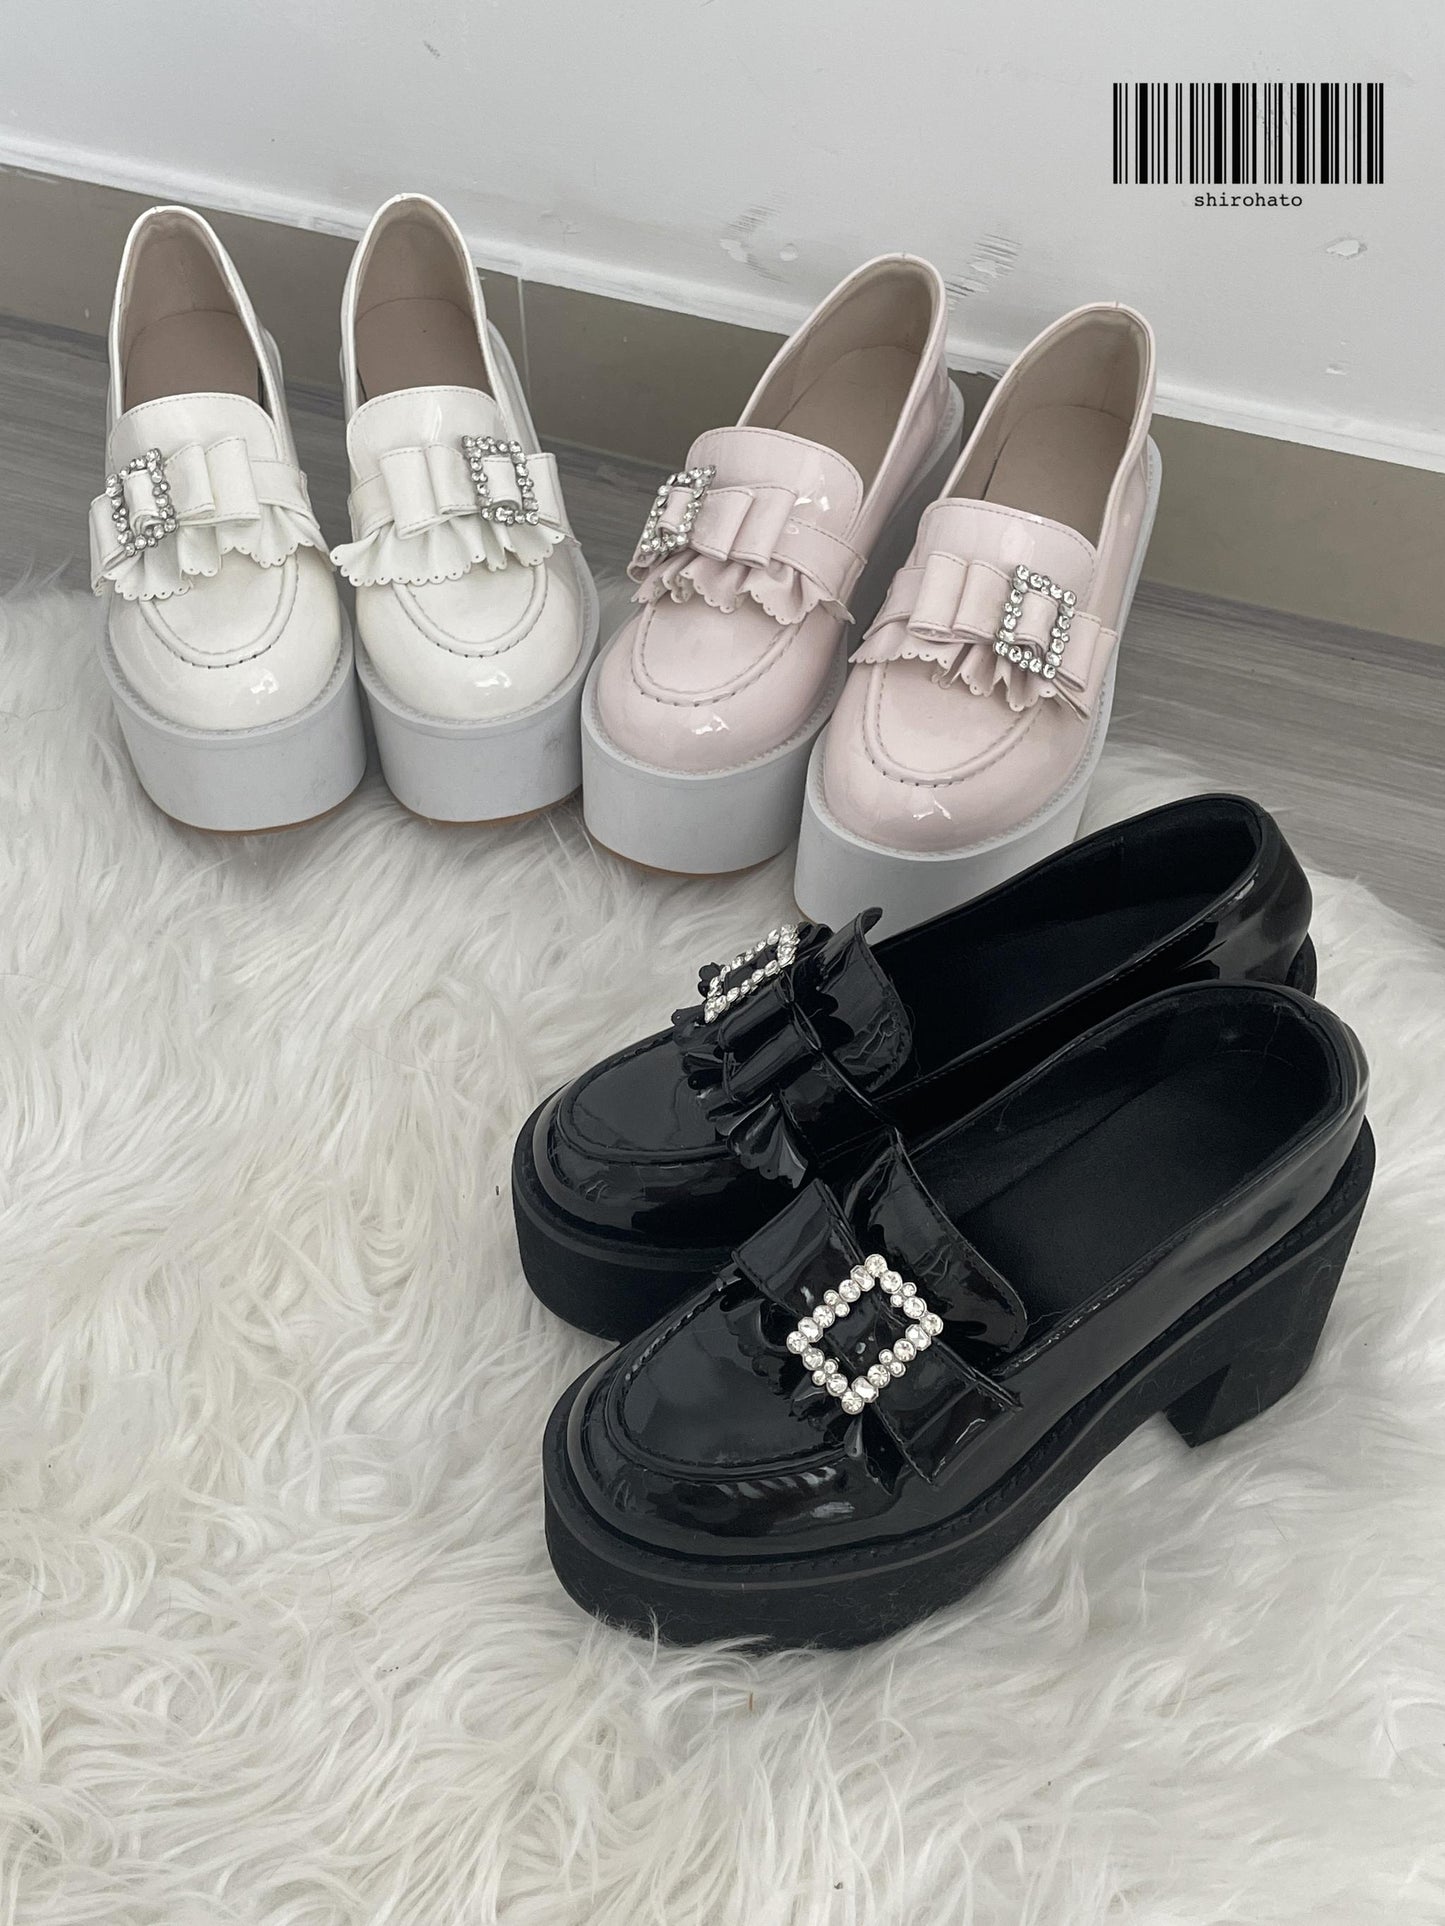 Jirai Kei Shoes High Heel Platform Shoes With Bow Tie 37280:554176